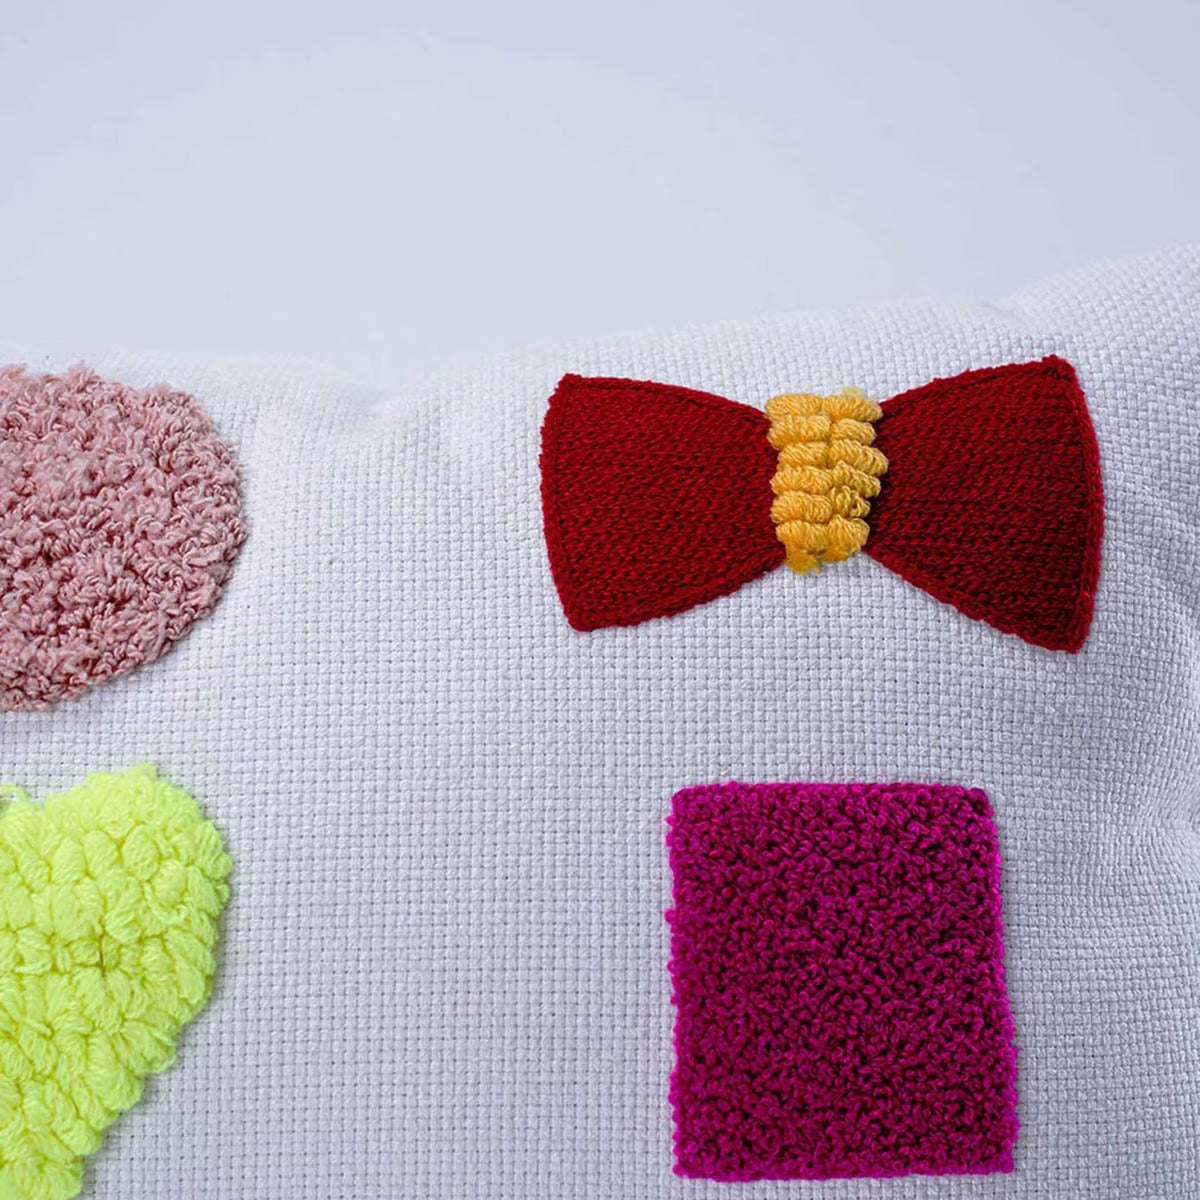 Maxmima Emoji Embroidered Filled Cushion 30x50cm-White